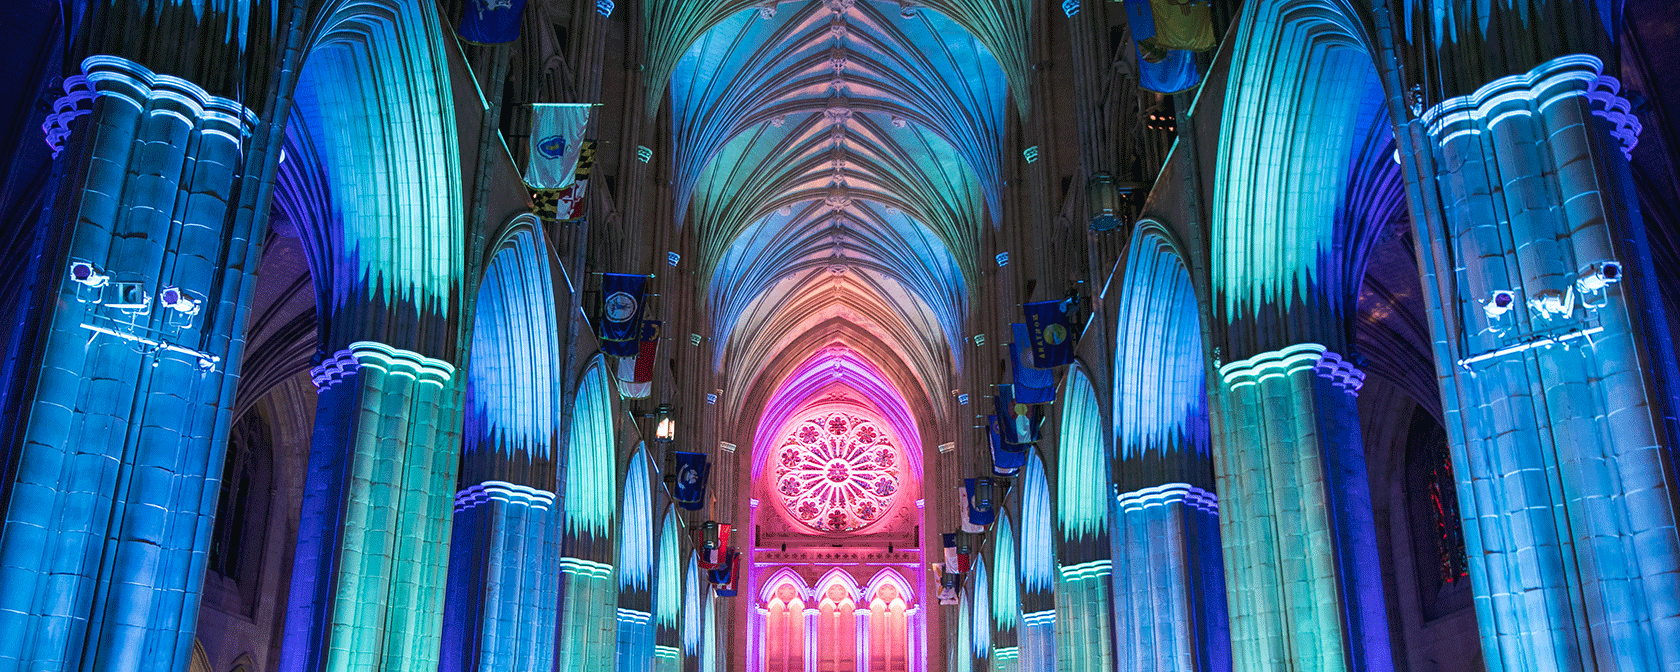 Cathedral light up inside with Blue & Pink lights (Credit: Jason Dixson)